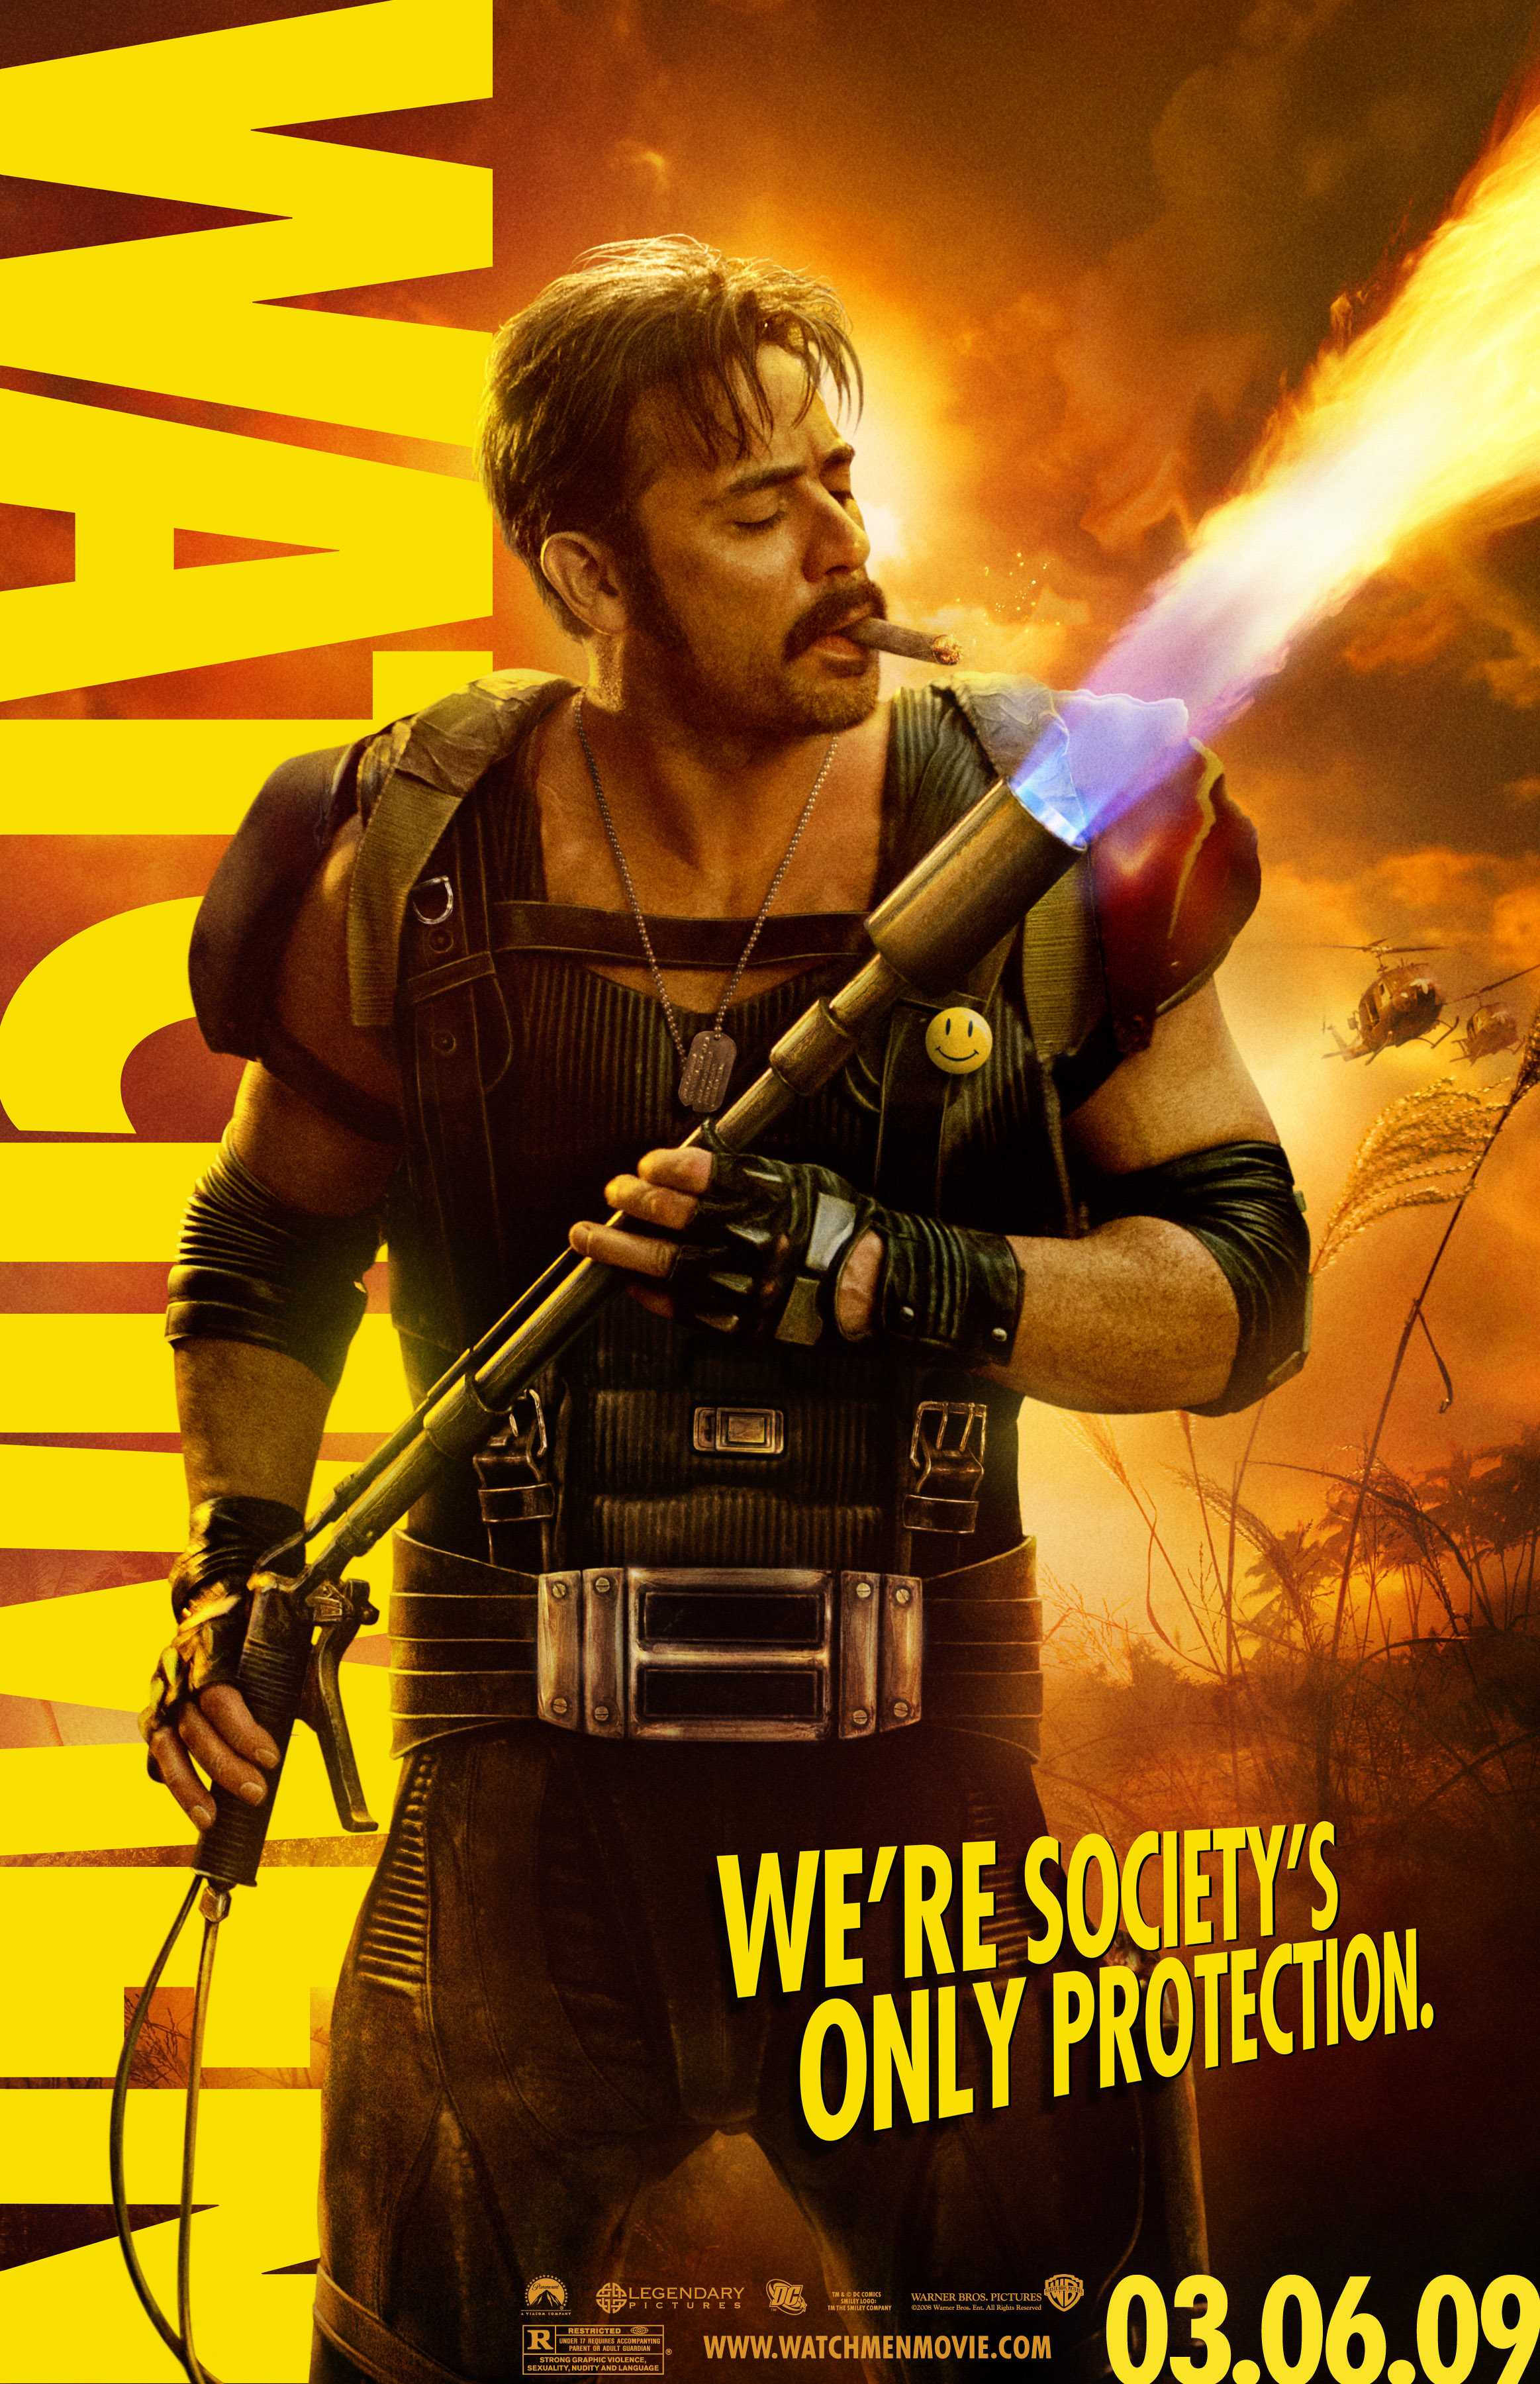 Poster of Watchmen